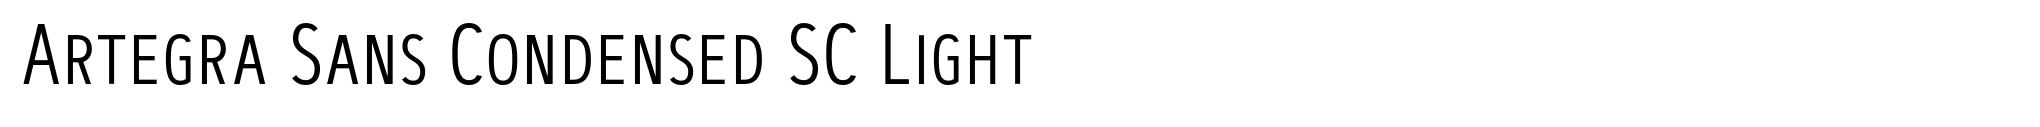 Artegra Sans Condensed SC Light image